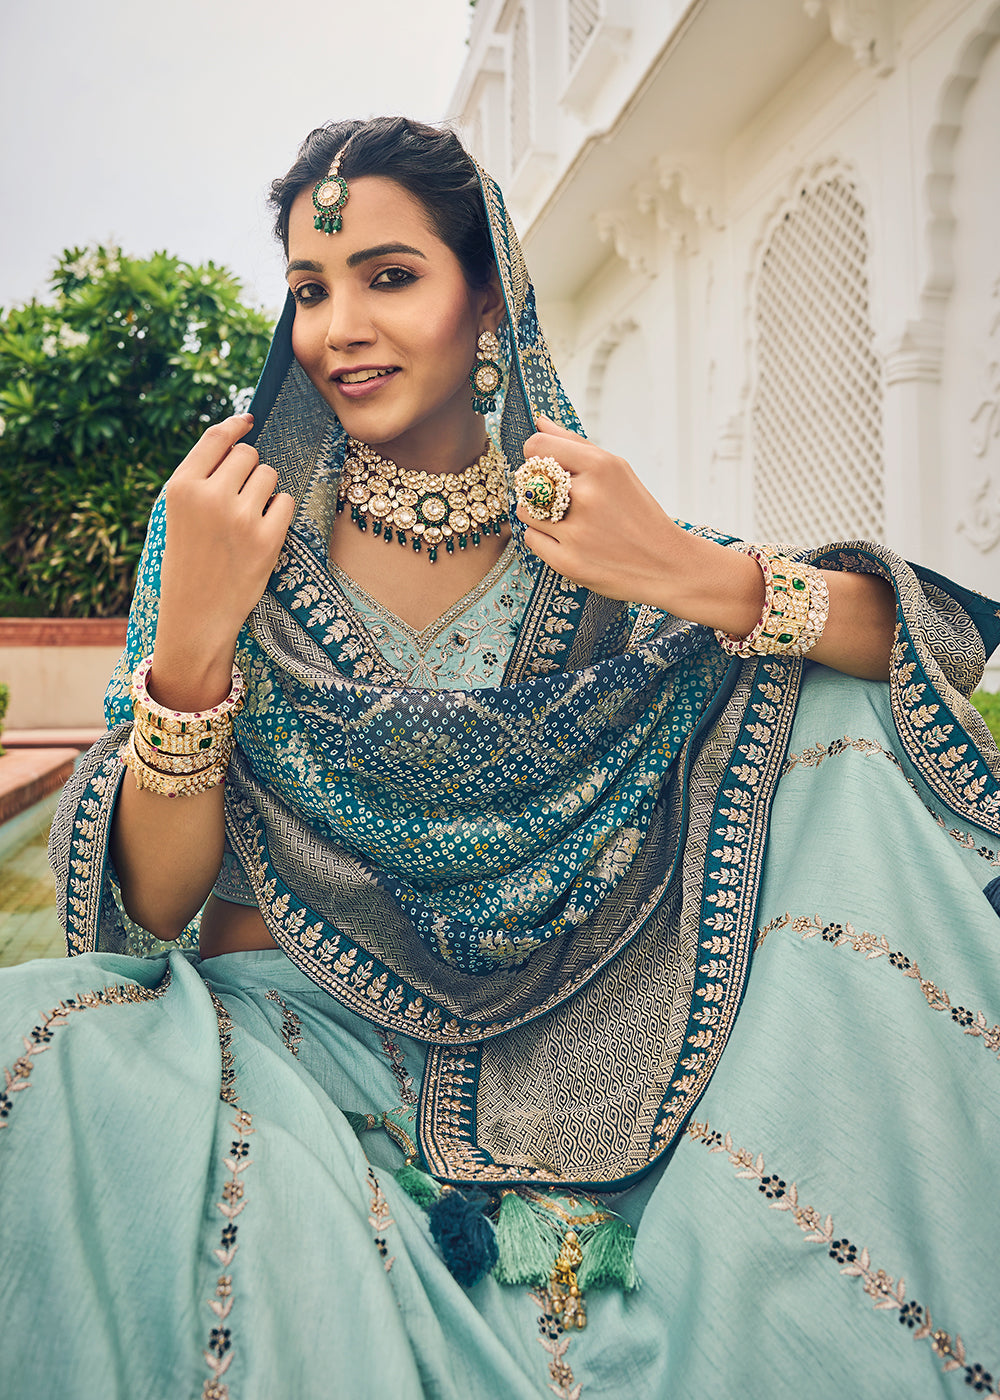 Buy Now Captivating Sky Blue Viscose Silk Traditional Bridal Lehenga Choli Online in USA, UK, Canada & Worldwide at Empress Clothing.